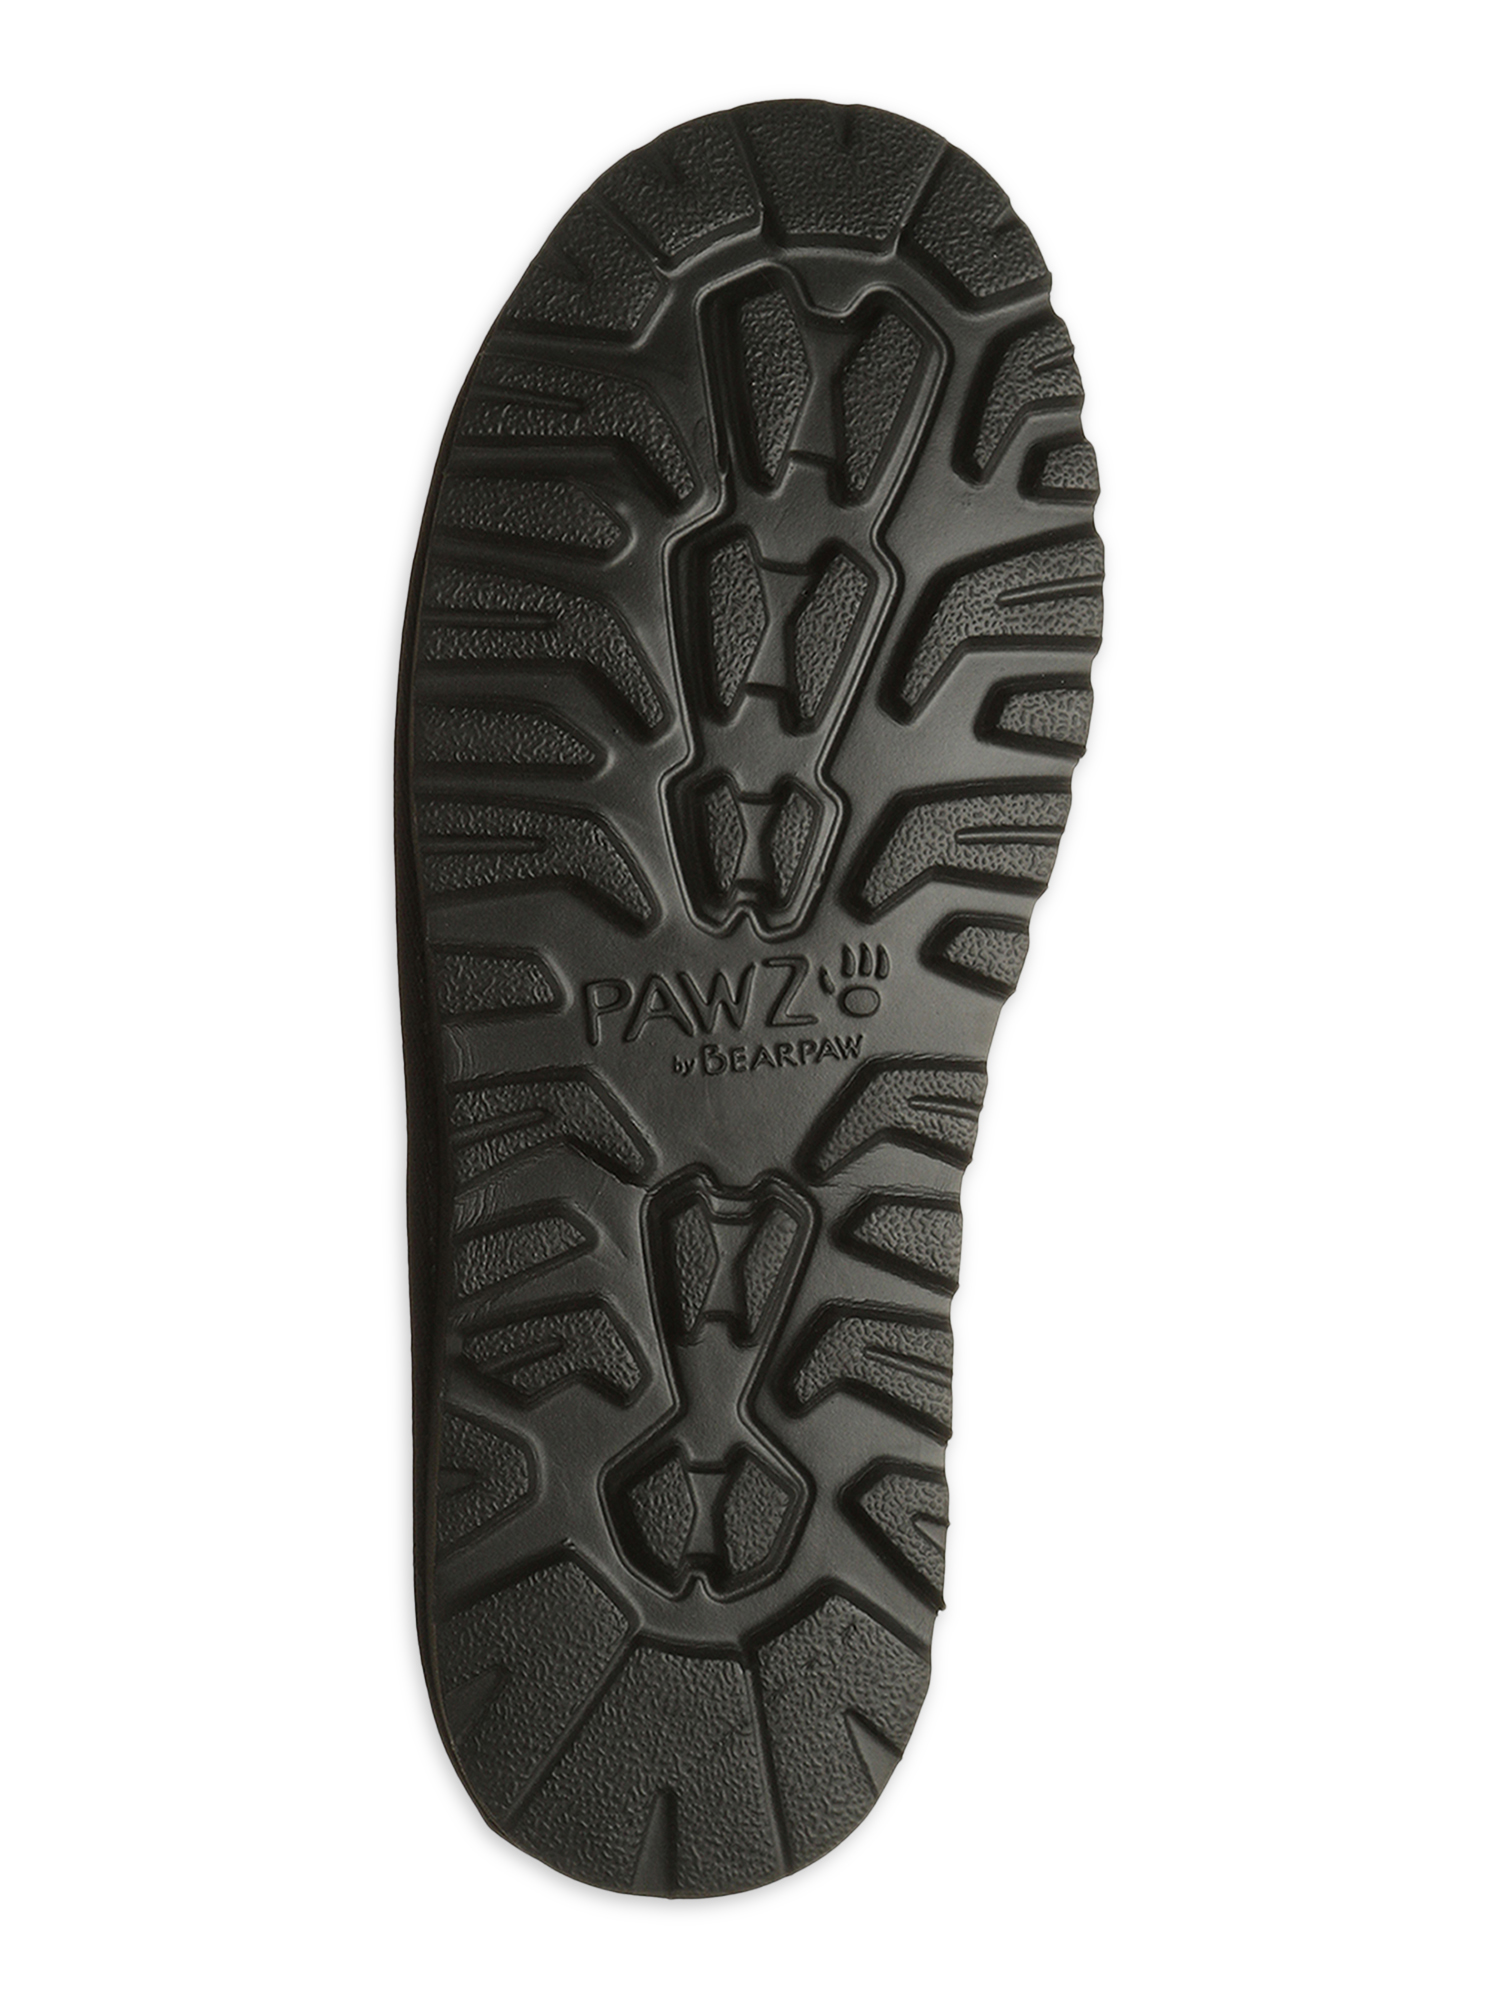 Pawz by Bearpaw Men's Genuine Suede Damian Bootie Slip-Ons - image 4 of 6